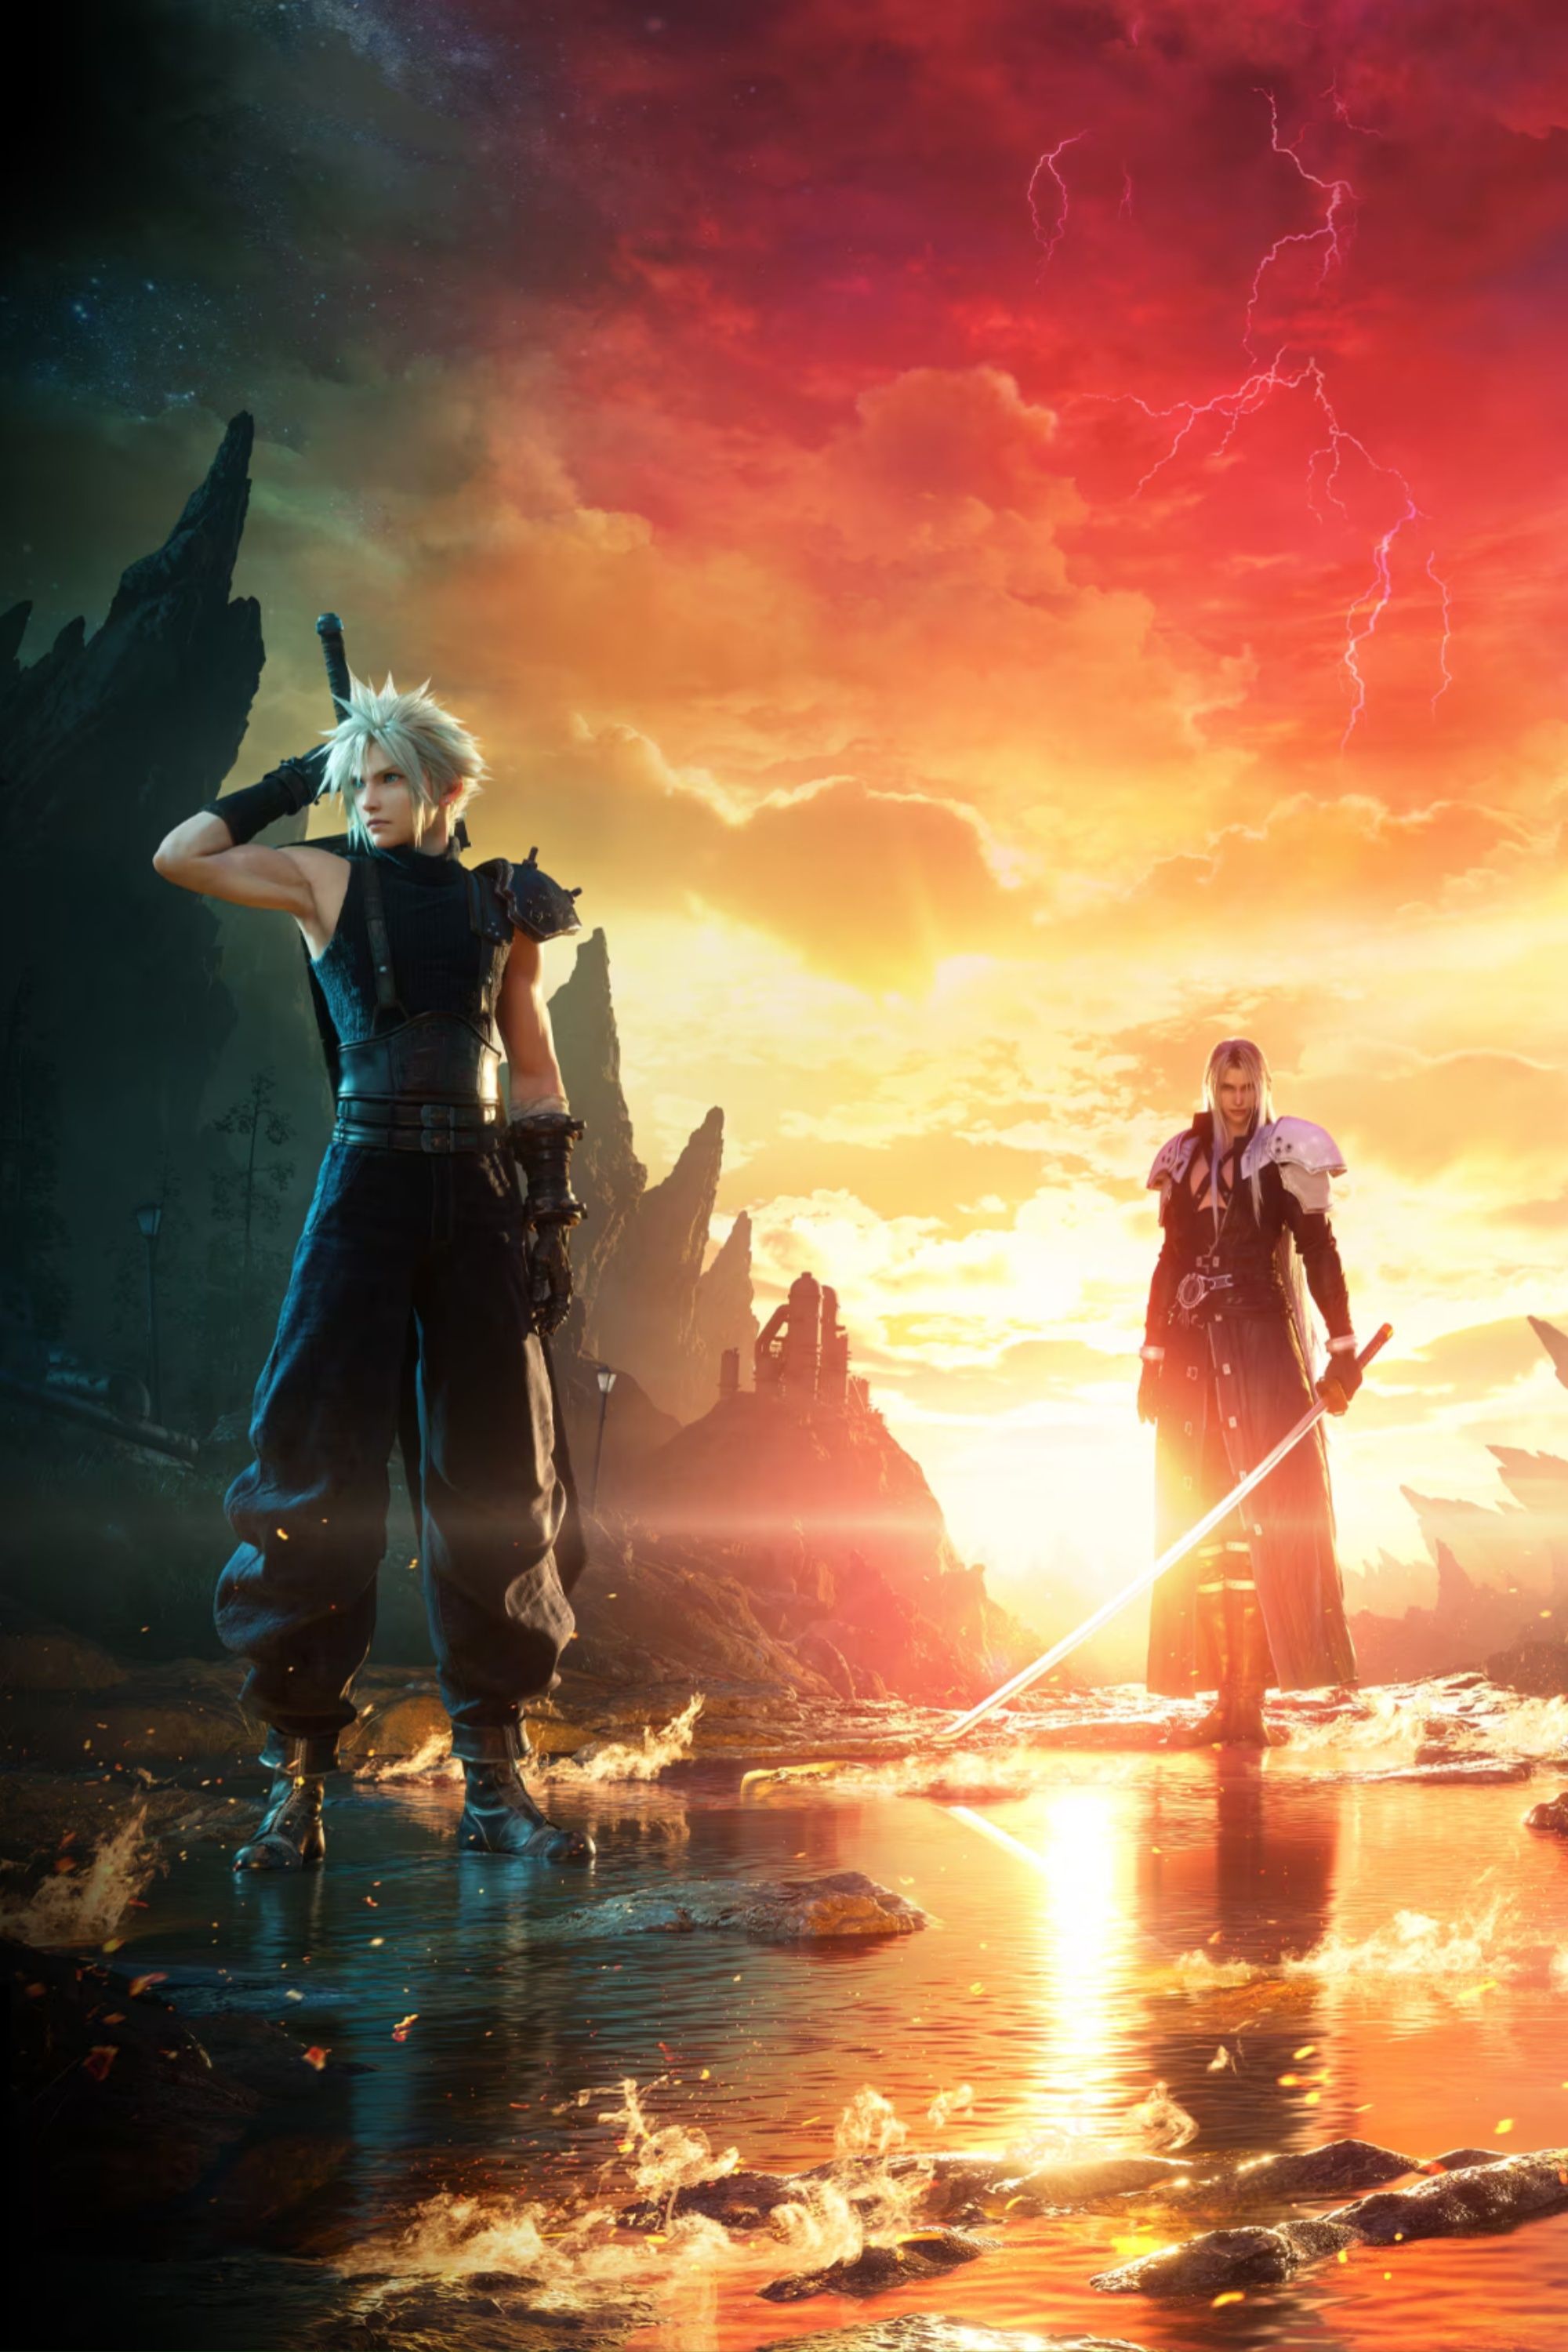 Final Fantasy 7 Rebirth: Pre-order bonuses for all editions - Polygon